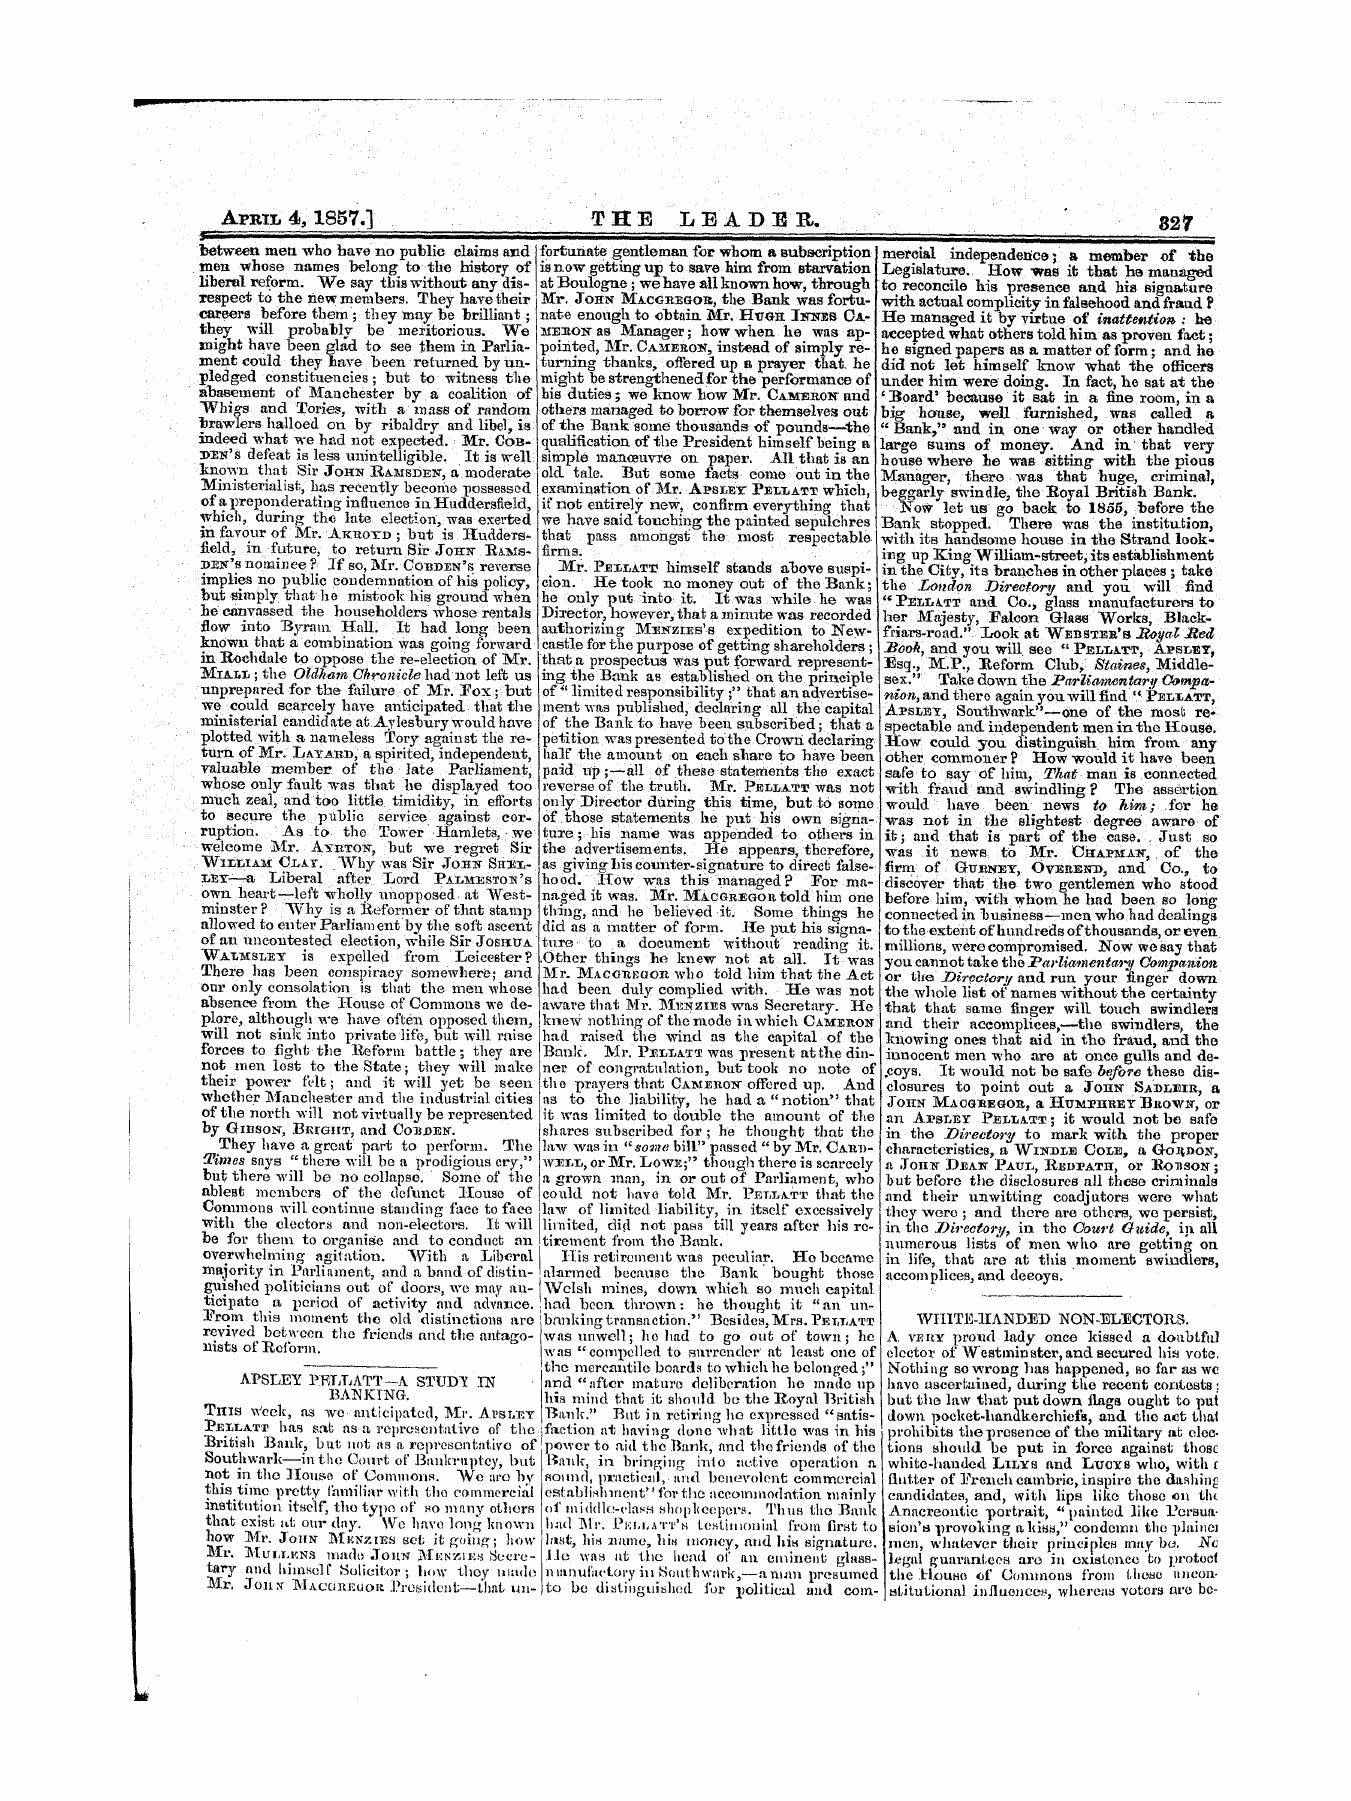 Leader (1850-1860): jS F Y, 1st edition - Apsley Prllatt—A Studt In Banking.